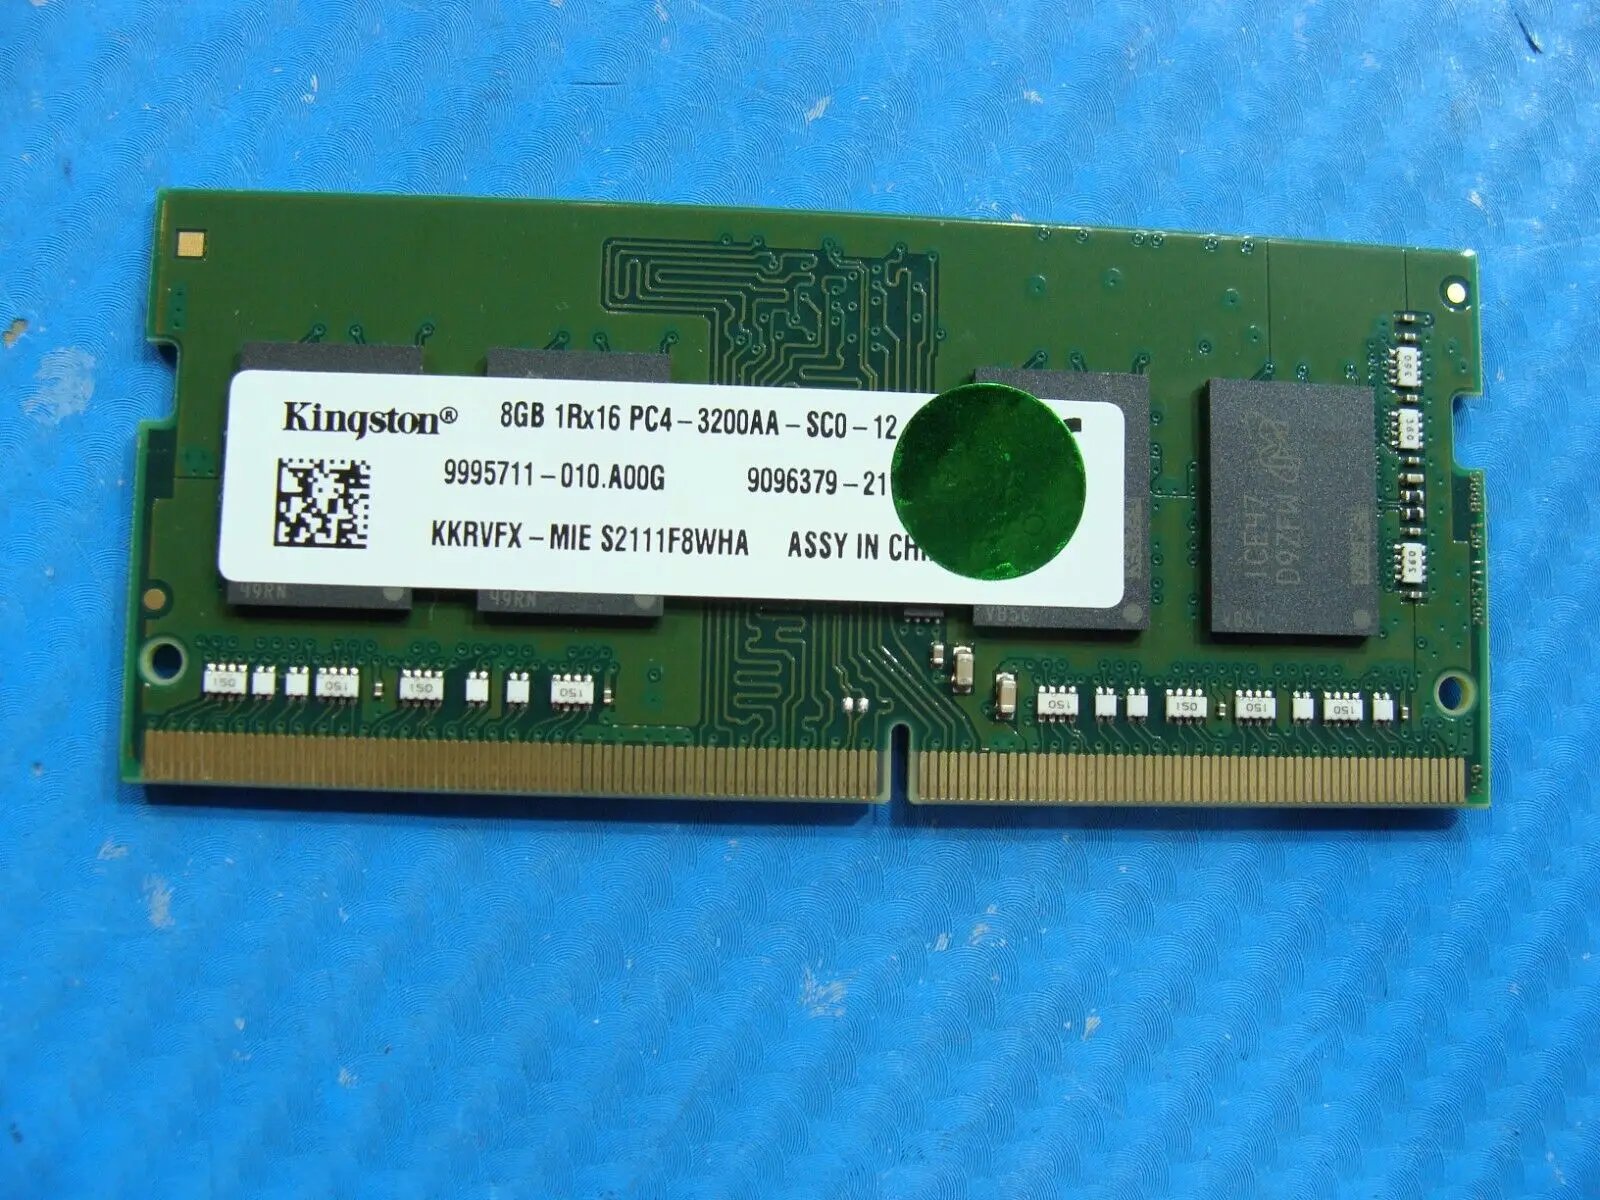 Dell 5406 Kingston 8GB 1Rx16 PC4-3200AA Memory RAM SO-DIMM KKRVFX-MIE